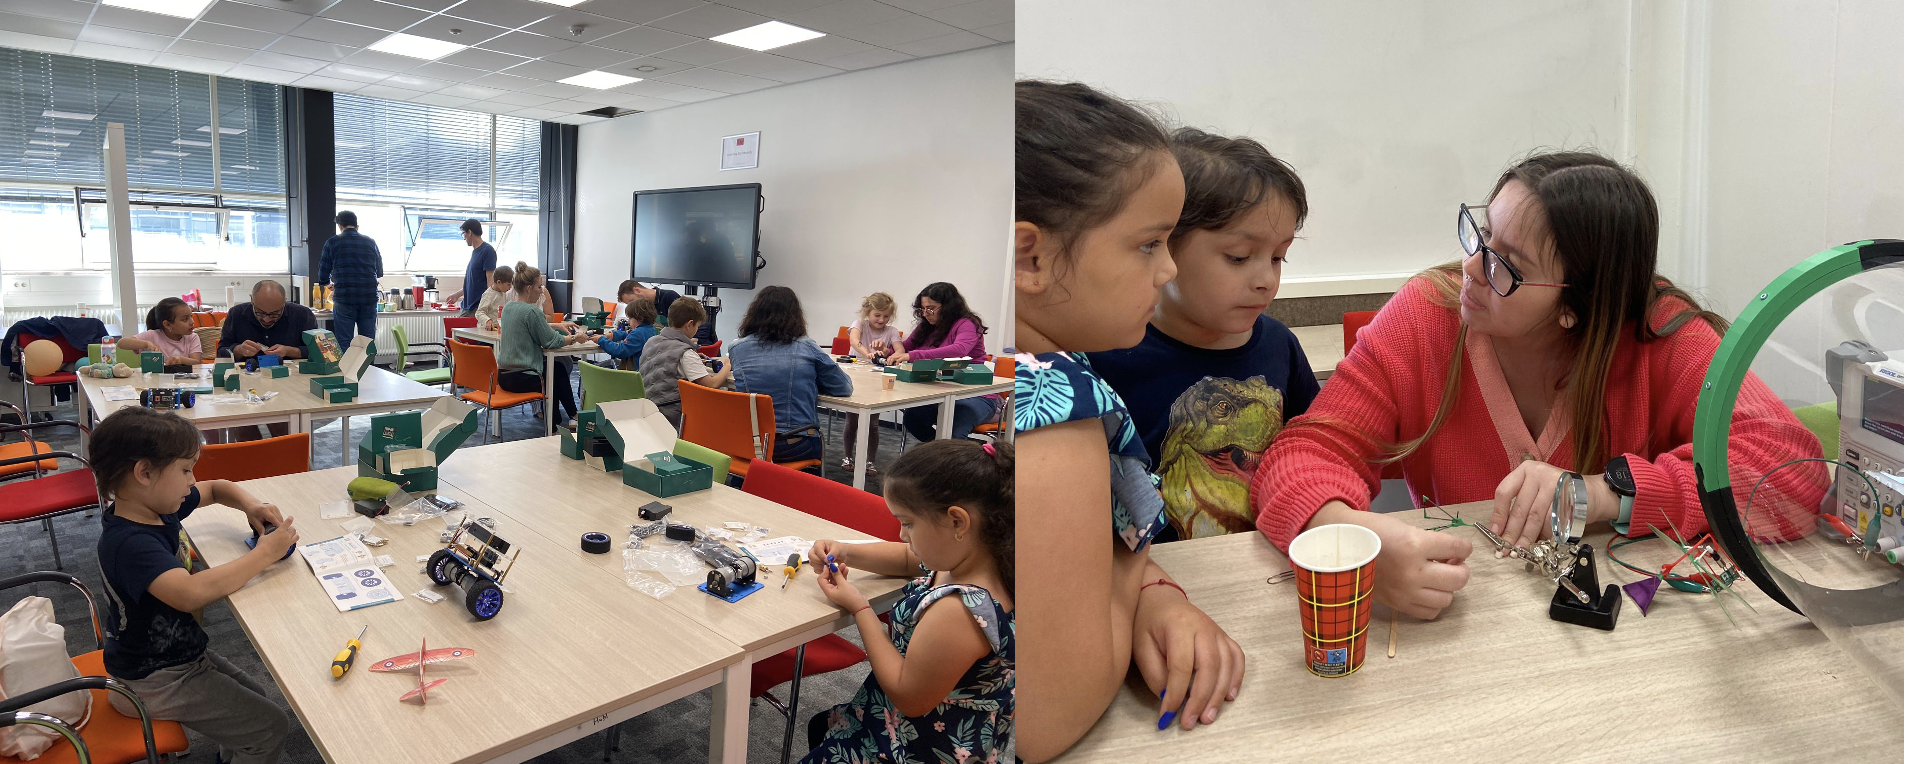 Robotics wokshop for kids and their parents